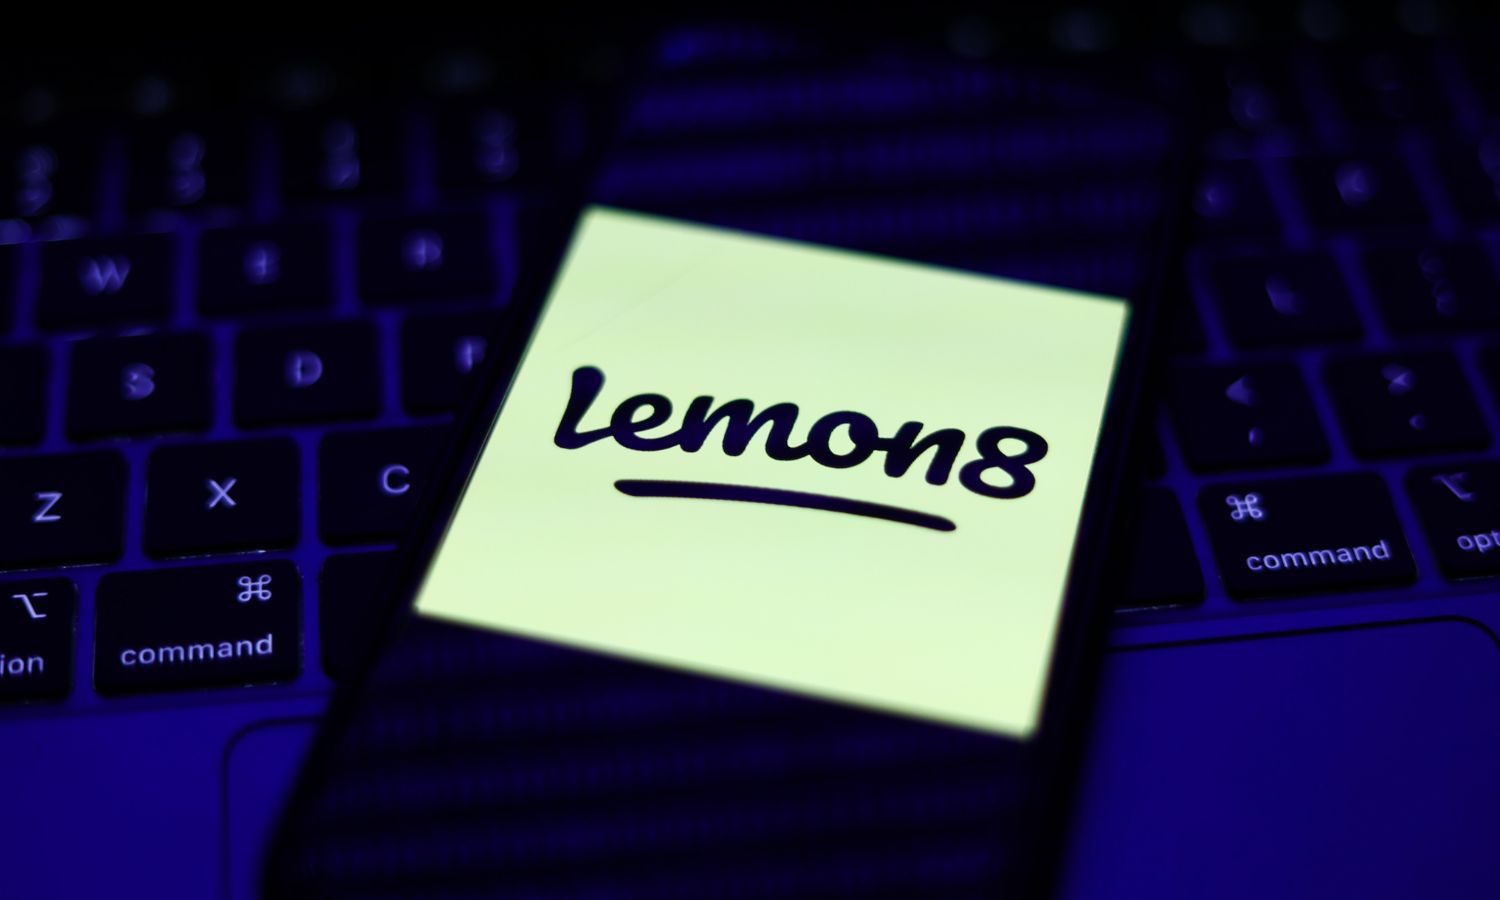 Lemon8 social media app